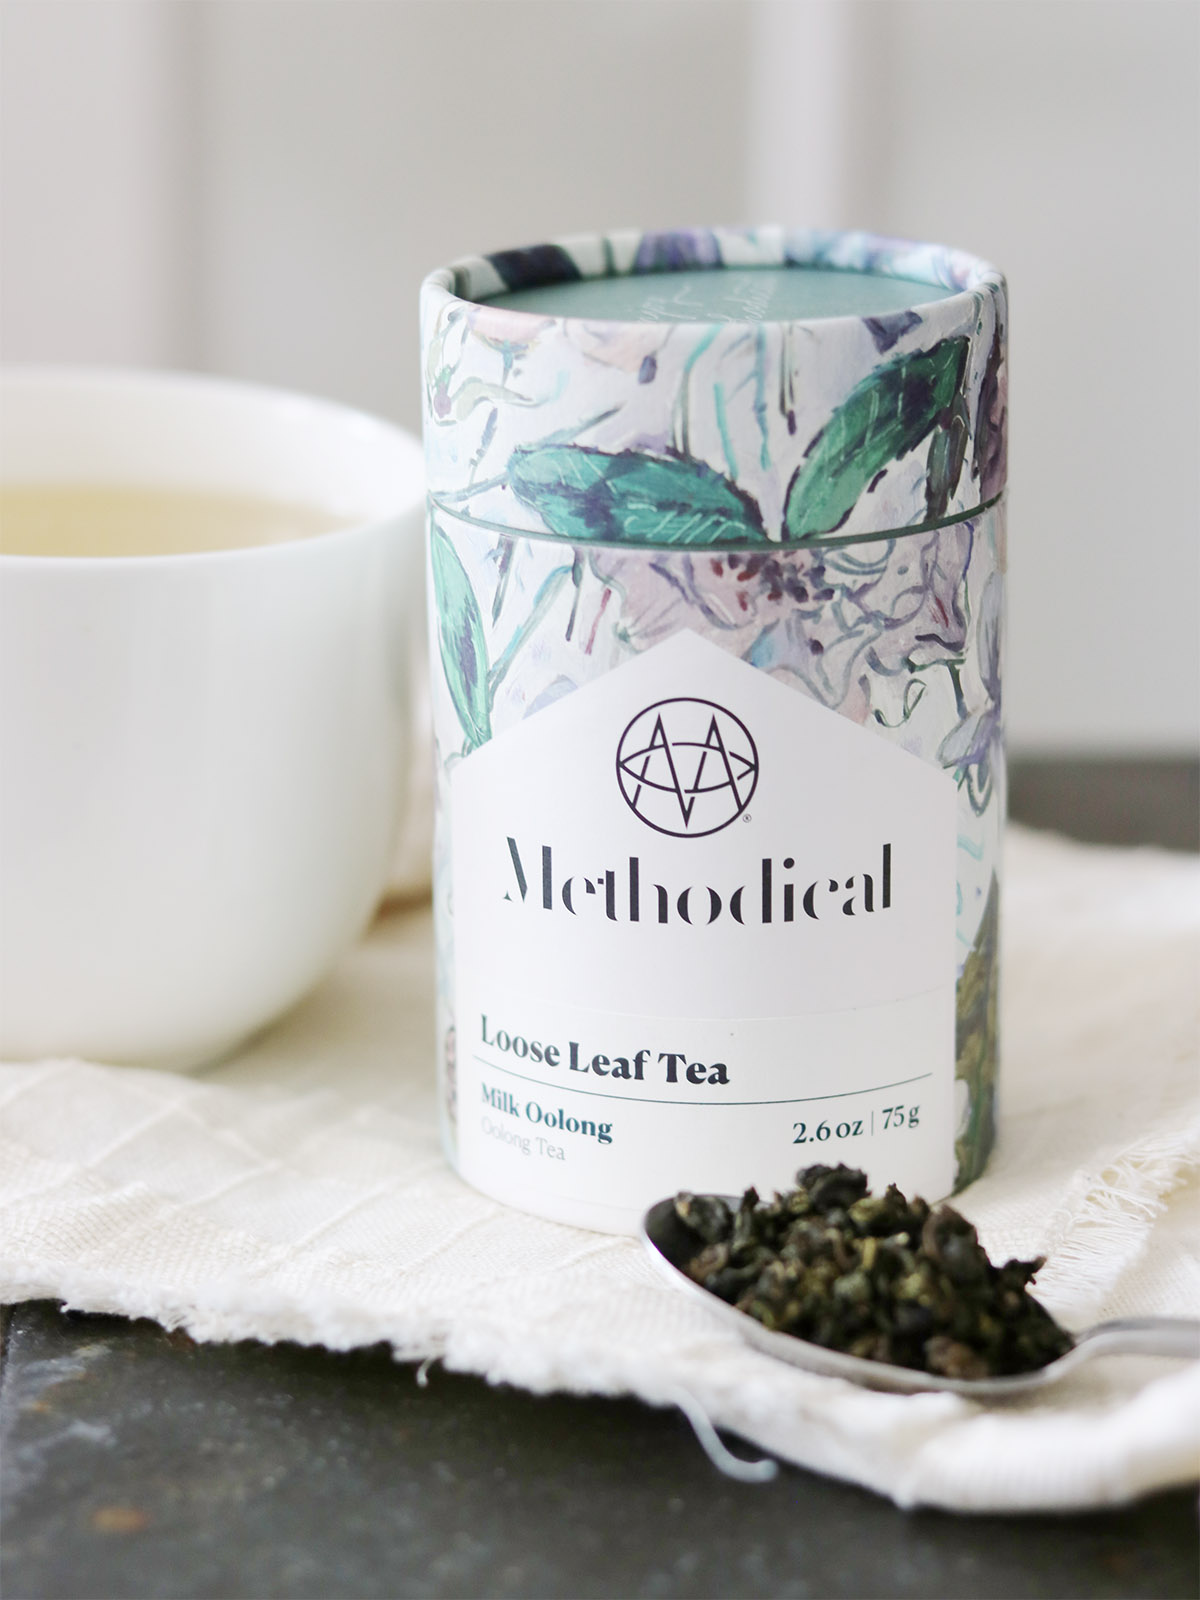 Milk Oolong Tea - Methodical - Mitzie Mee Shop